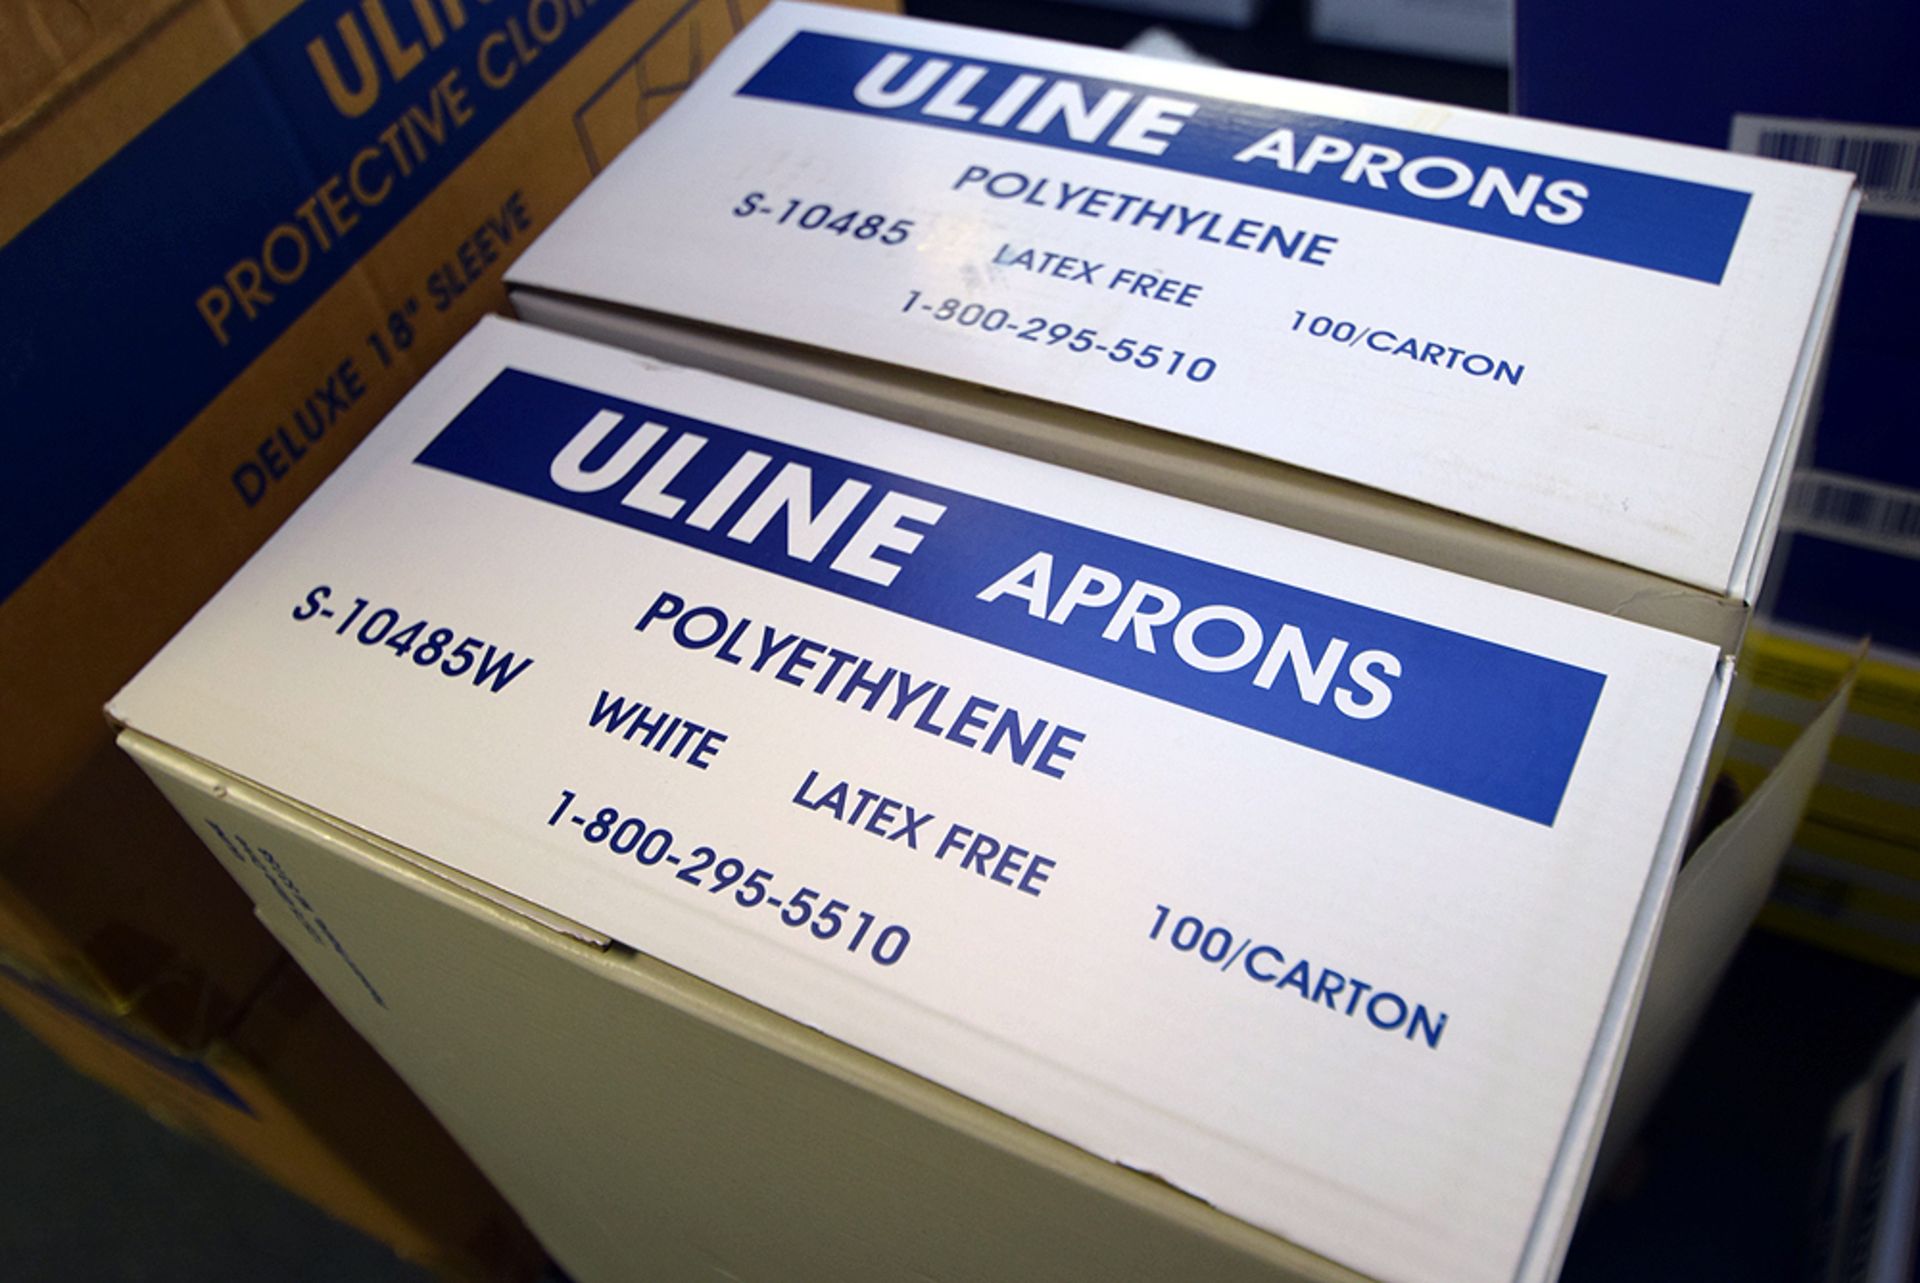 Boxes of Uline White Polyethylene Aprons